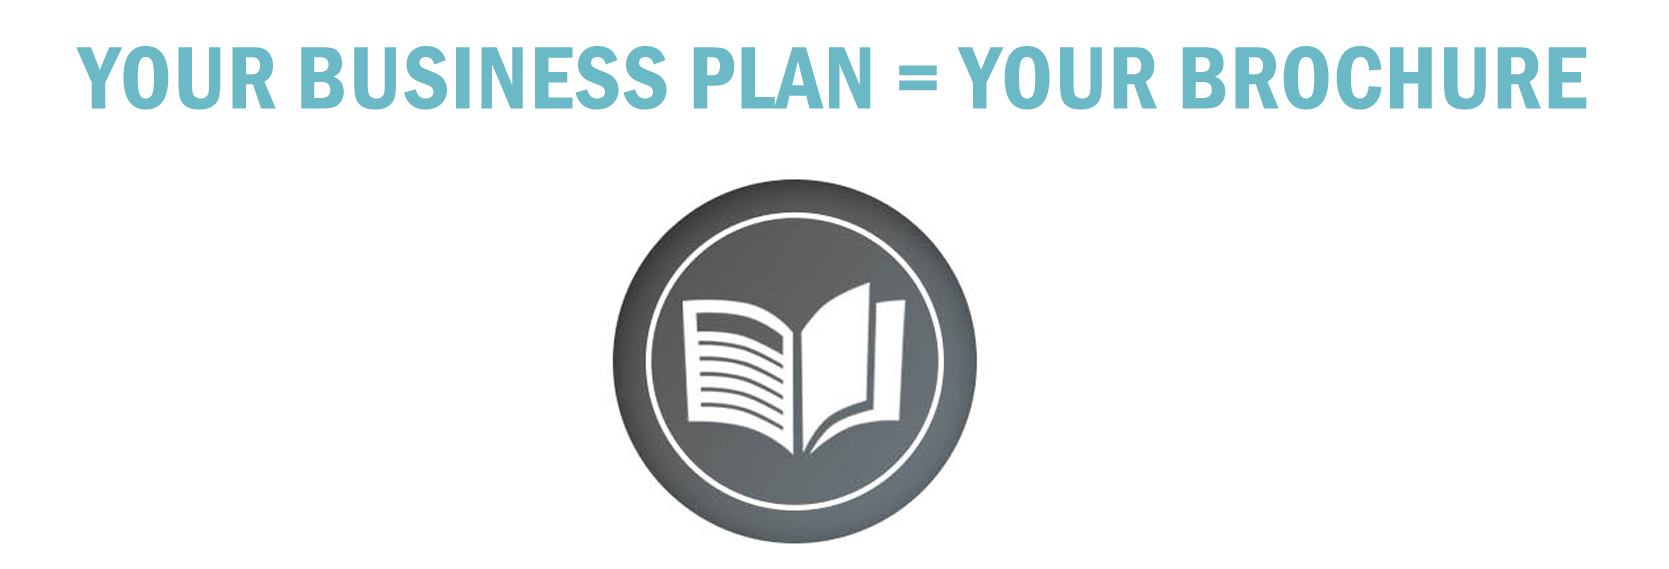 Business-Plan-Tips-Brochure